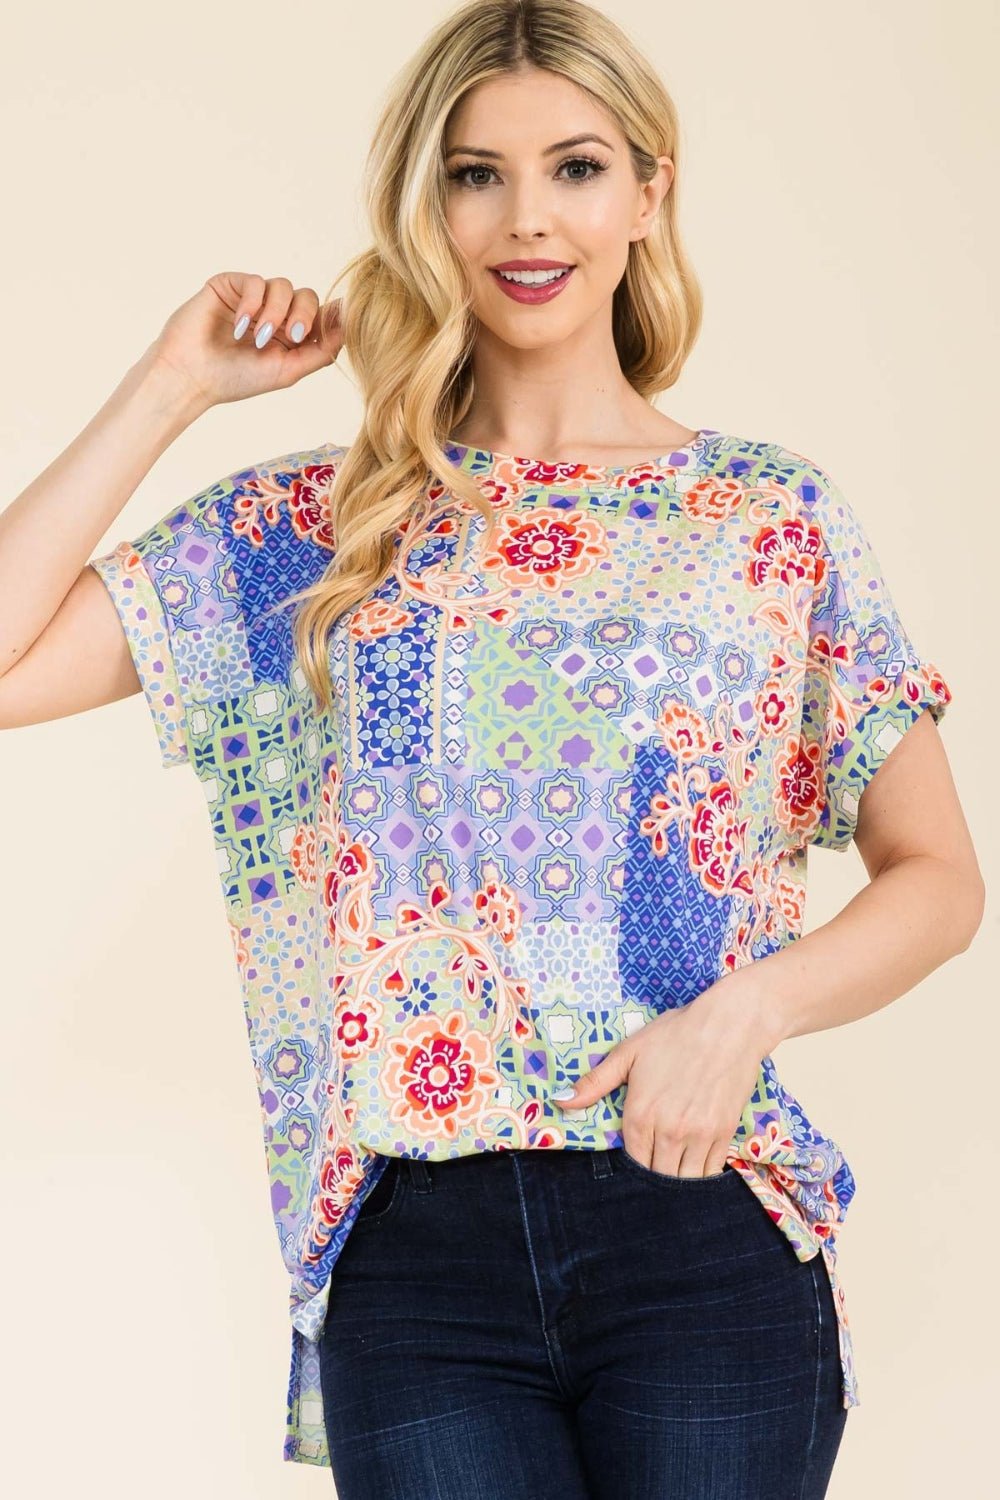 Crew Neck Short Sleeve Floral T-ShirtT-ShirtCeleste Design